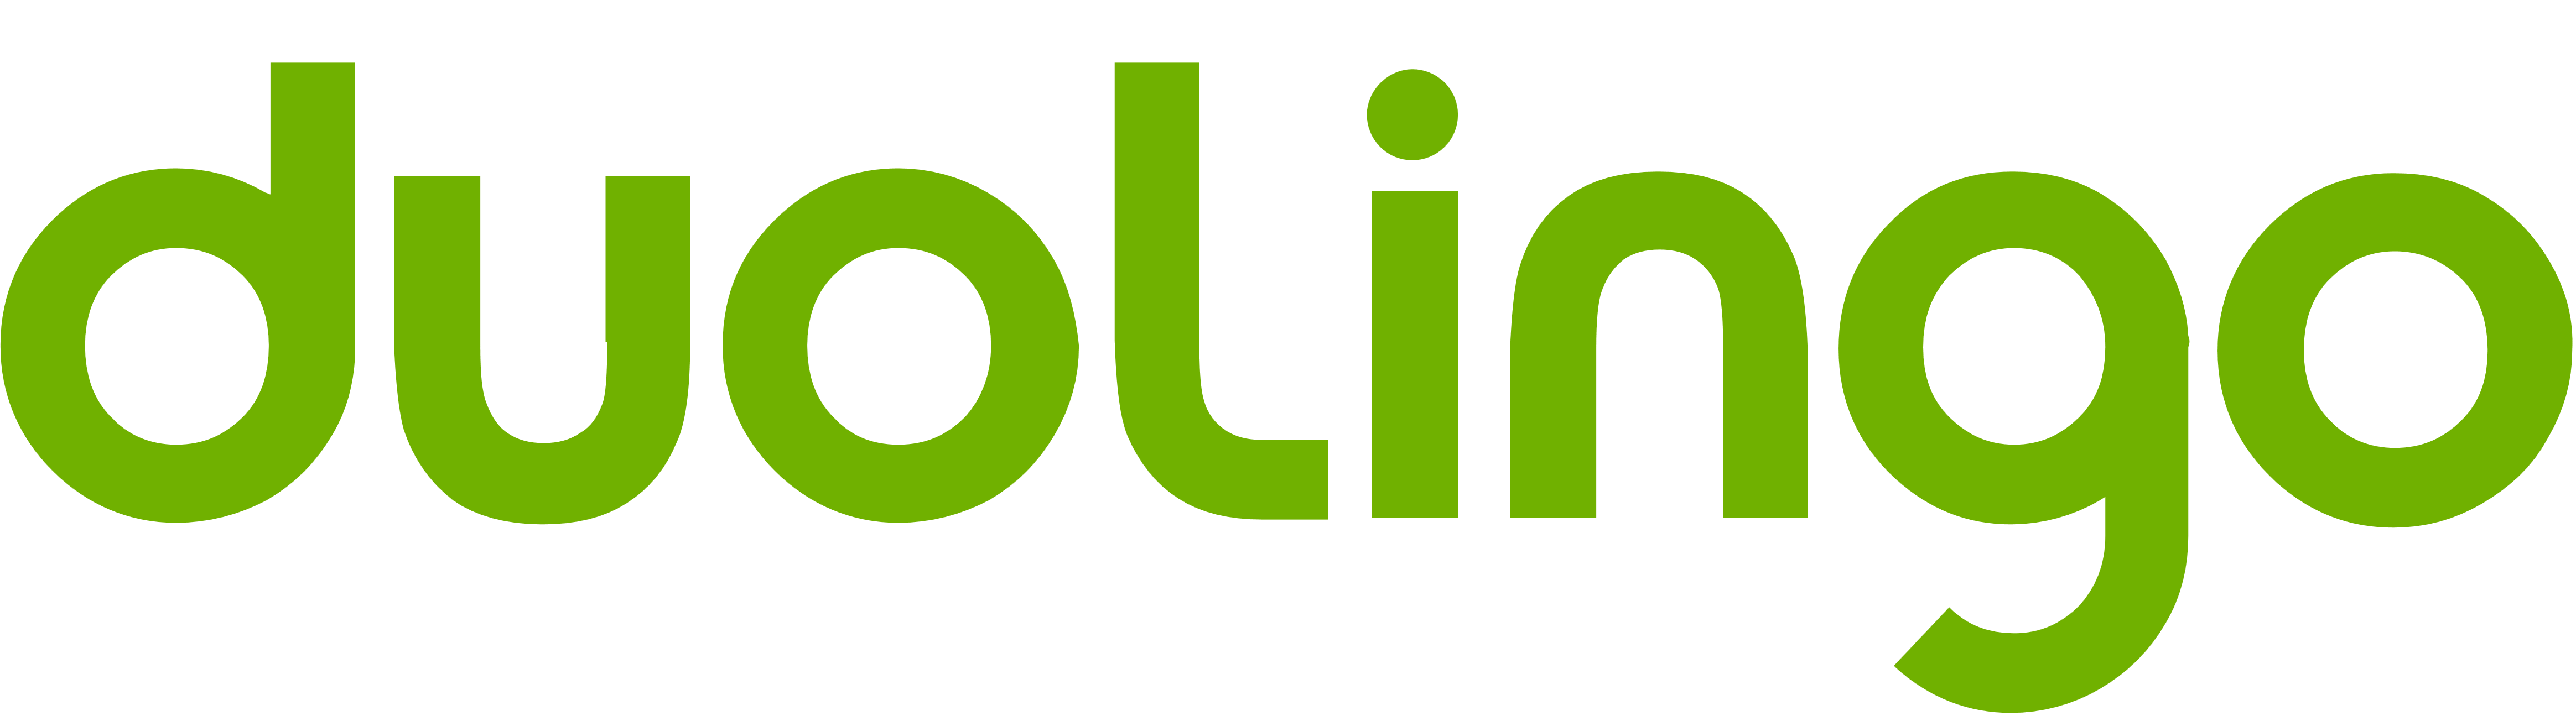 Duolingo – Logos Download